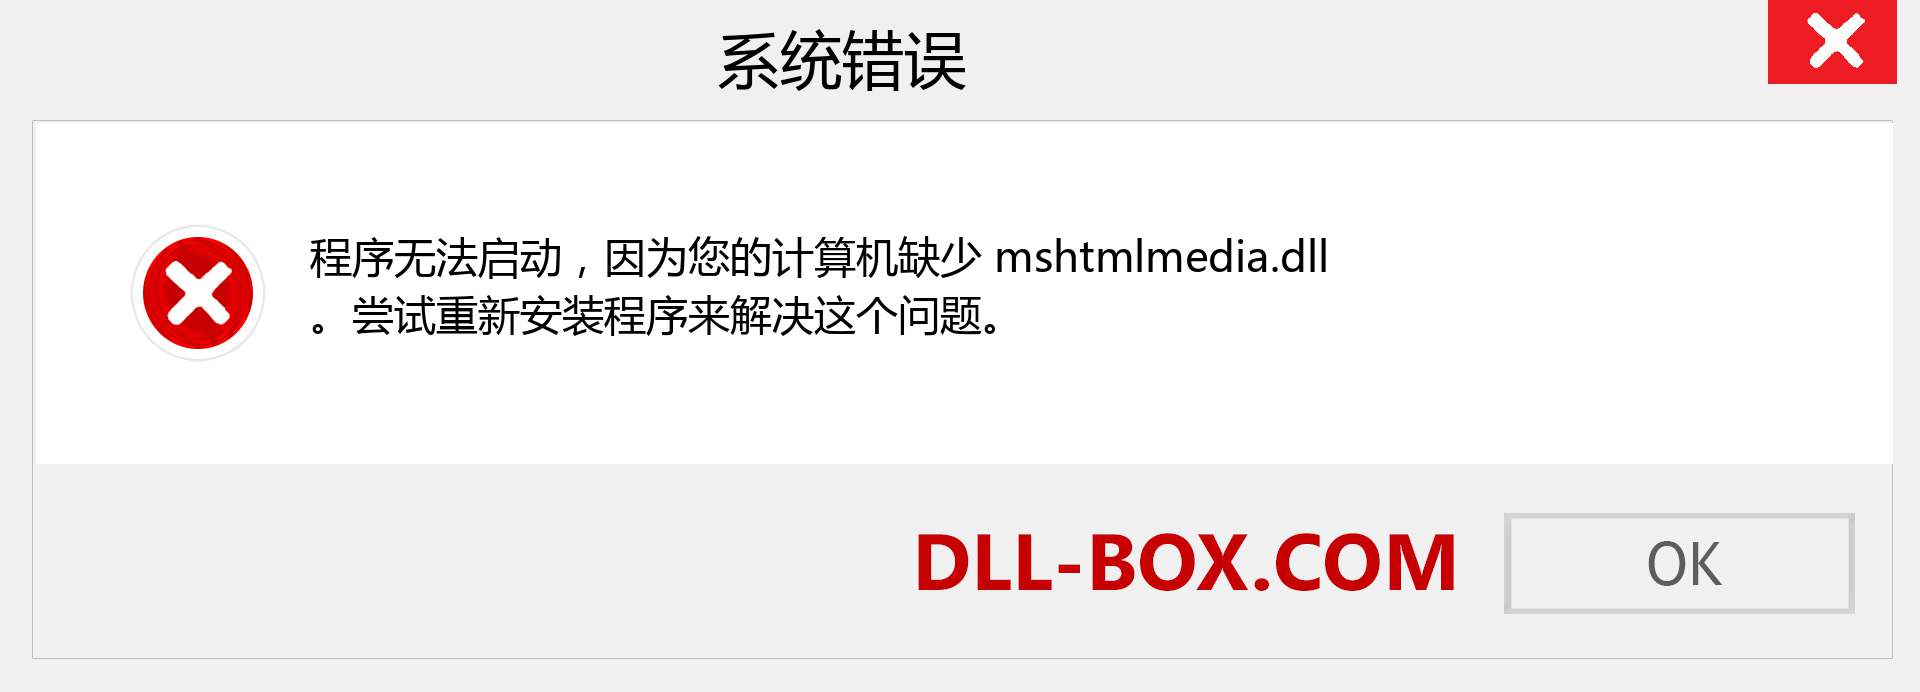 mshtmlmedia.dll 文件丢失？。 适用于 Windows 7、8、10 的下载 - 修复 Windows、照片、图像上的 mshtmlmedia dll 丢失错误